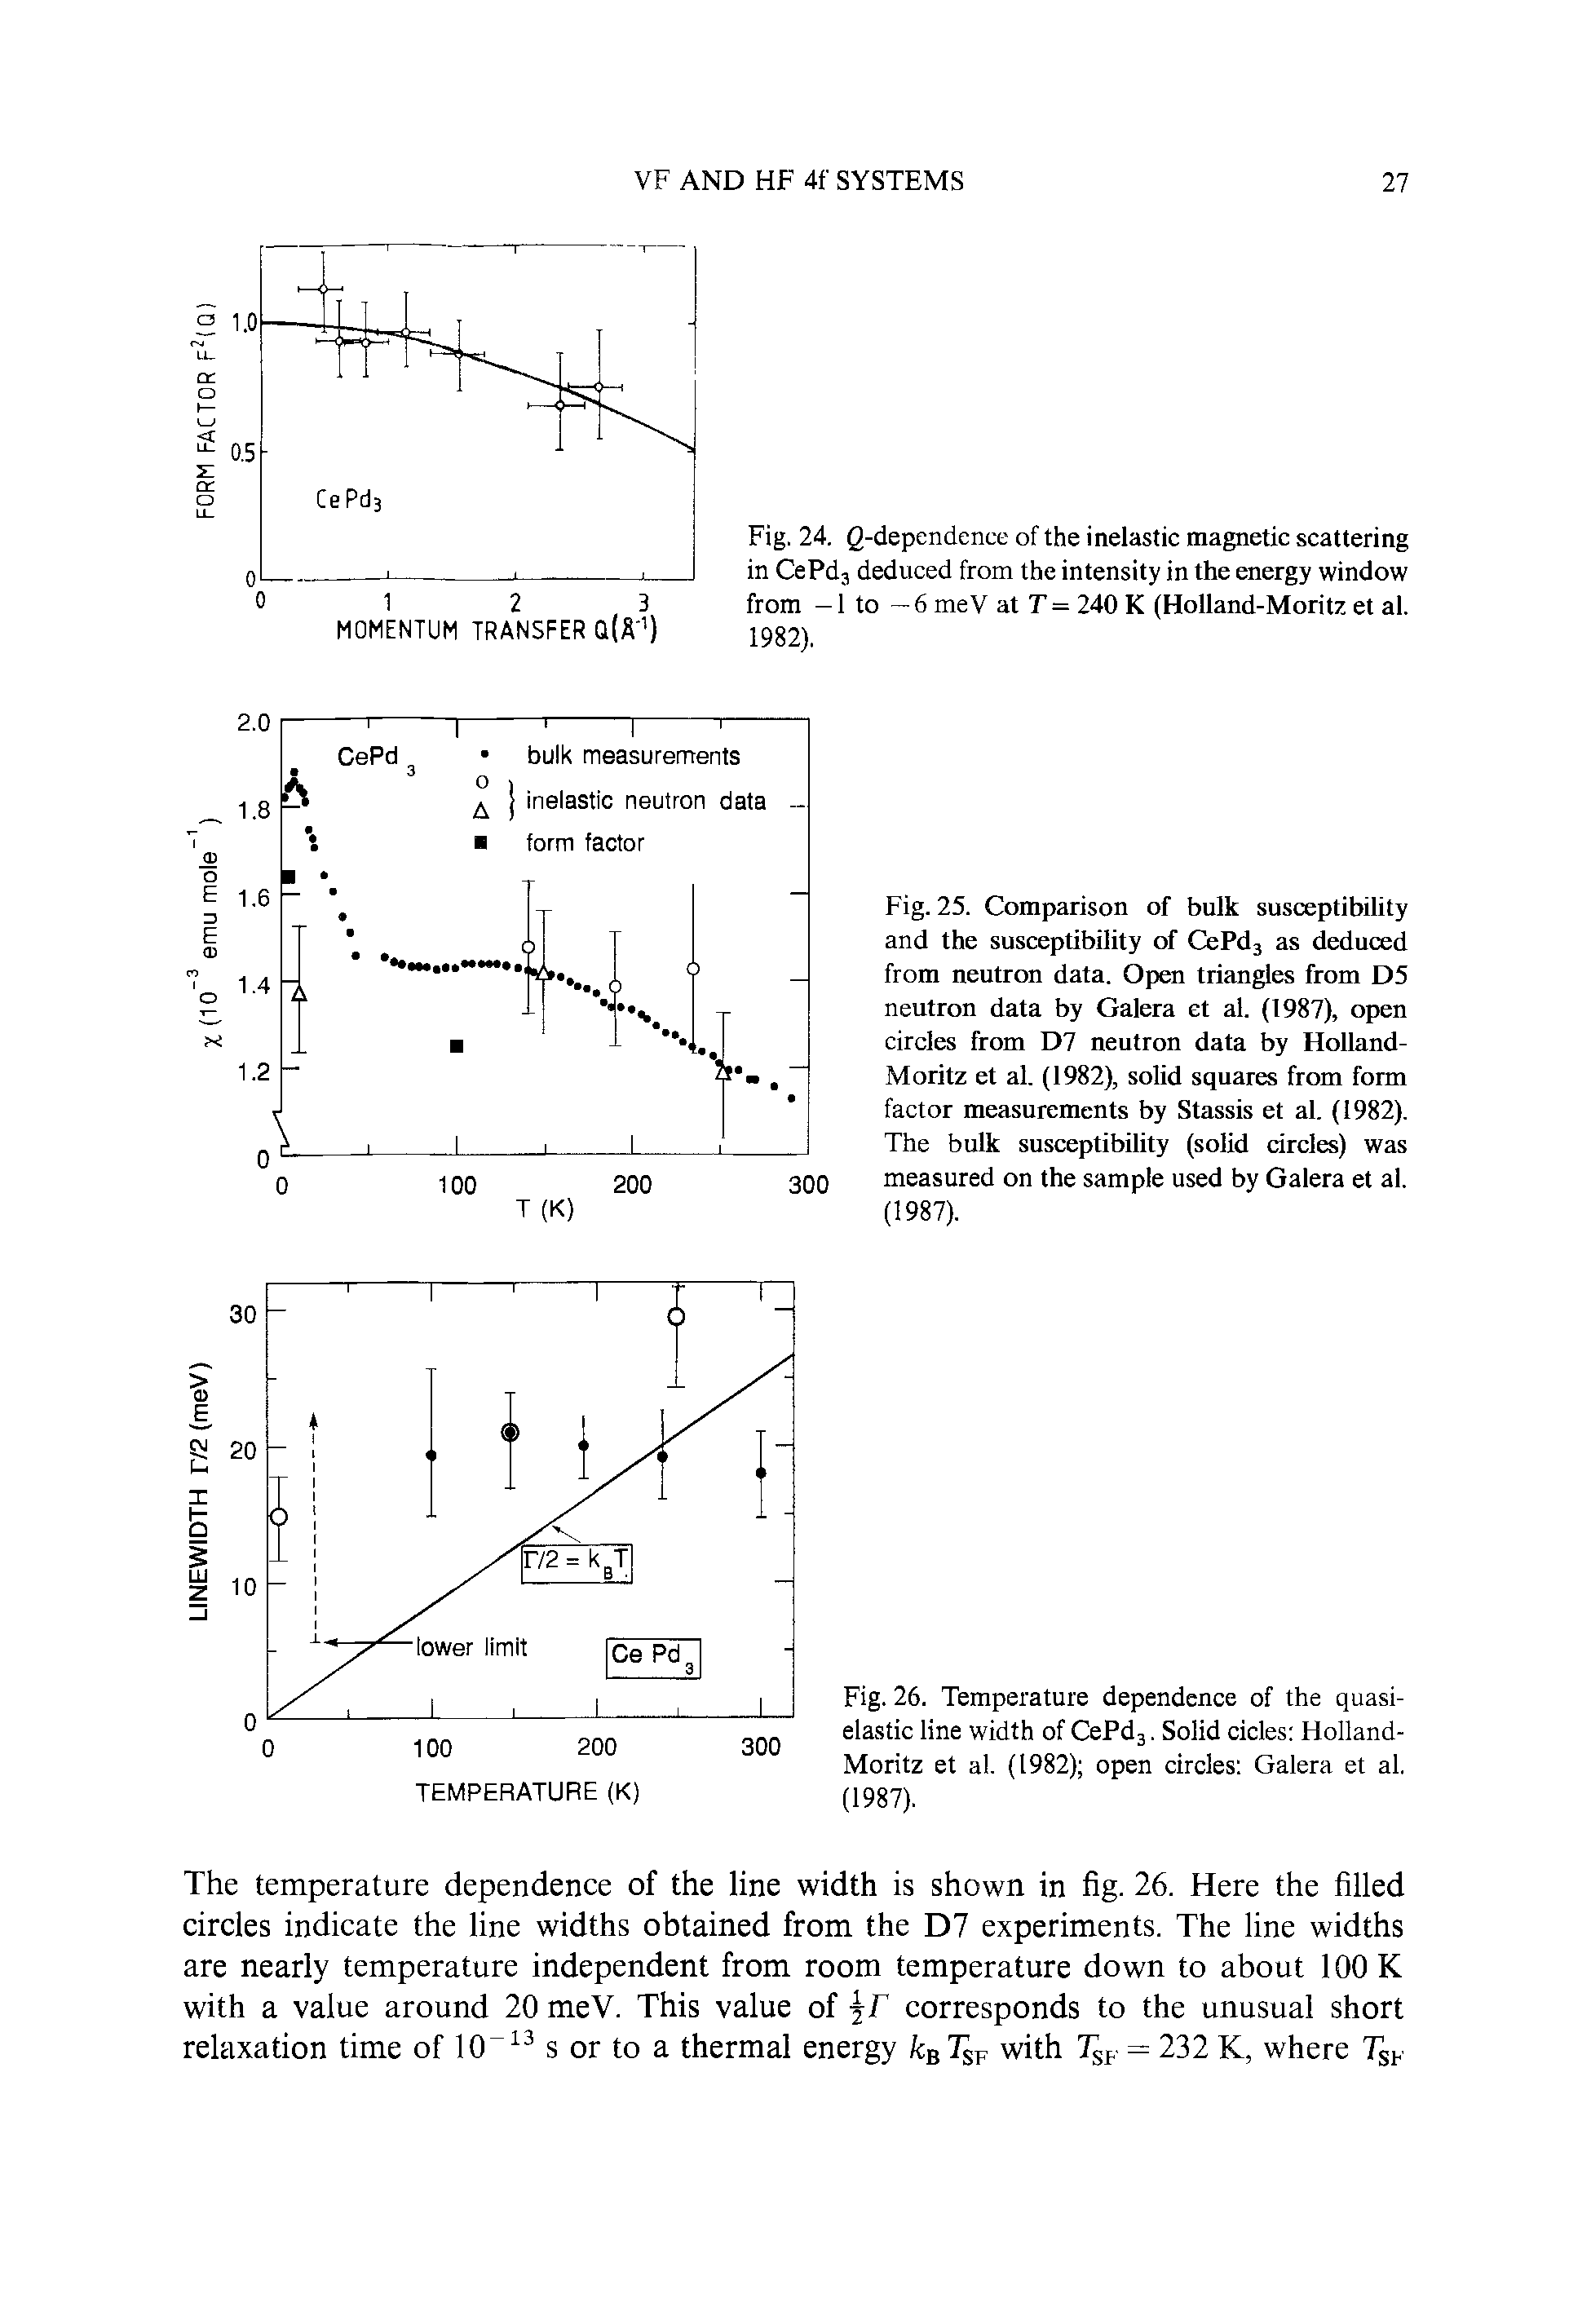 Fig. 26. Temperature dependence of the quasielastic line width of CePdj. Solid cicles Holland-Moritz et al. (1982) open circles Galera et al. (1987).